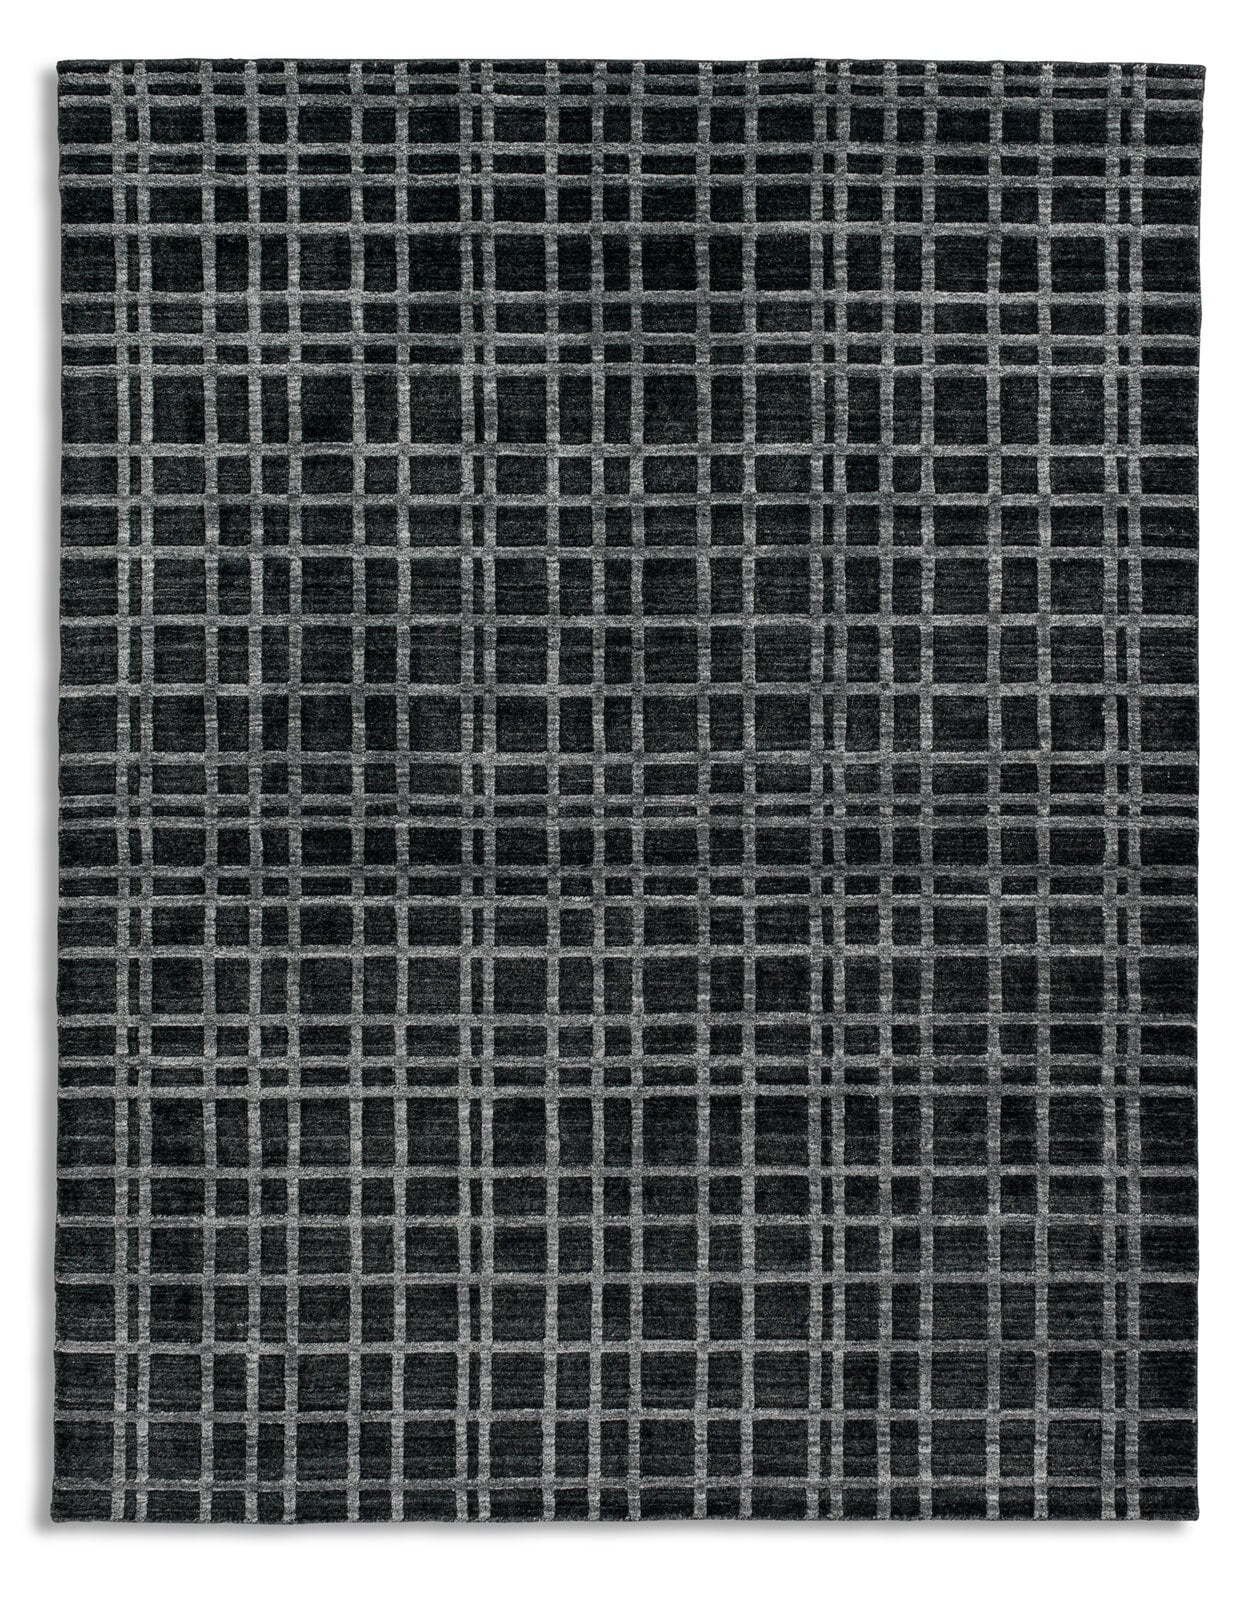 SCHÖNER WOHNEN-Kollektion Teppich COSETTA GITTER 200 x 300 cm silberfarbig